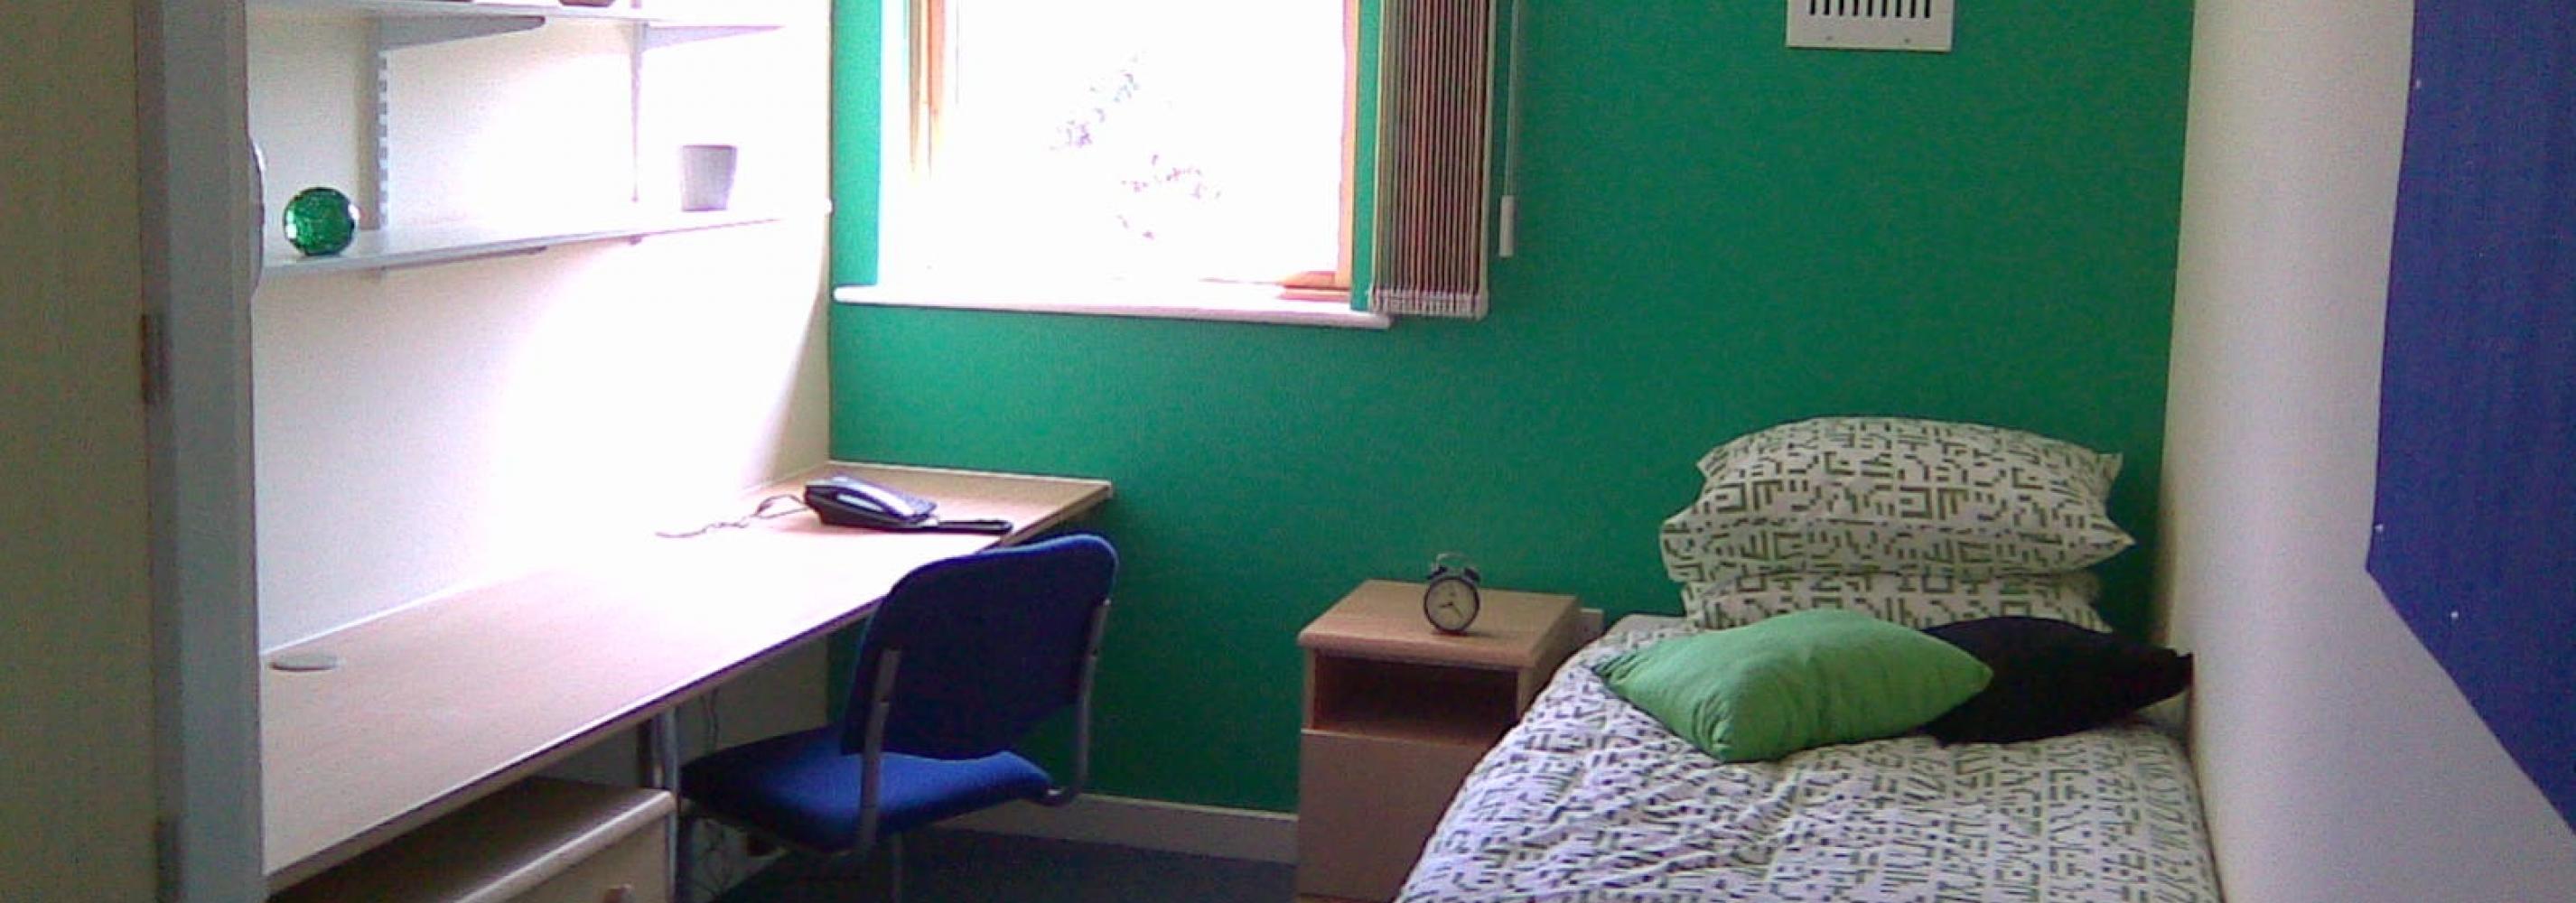 Bedroom, bed, window, desk, chair, shelves and noticeboard